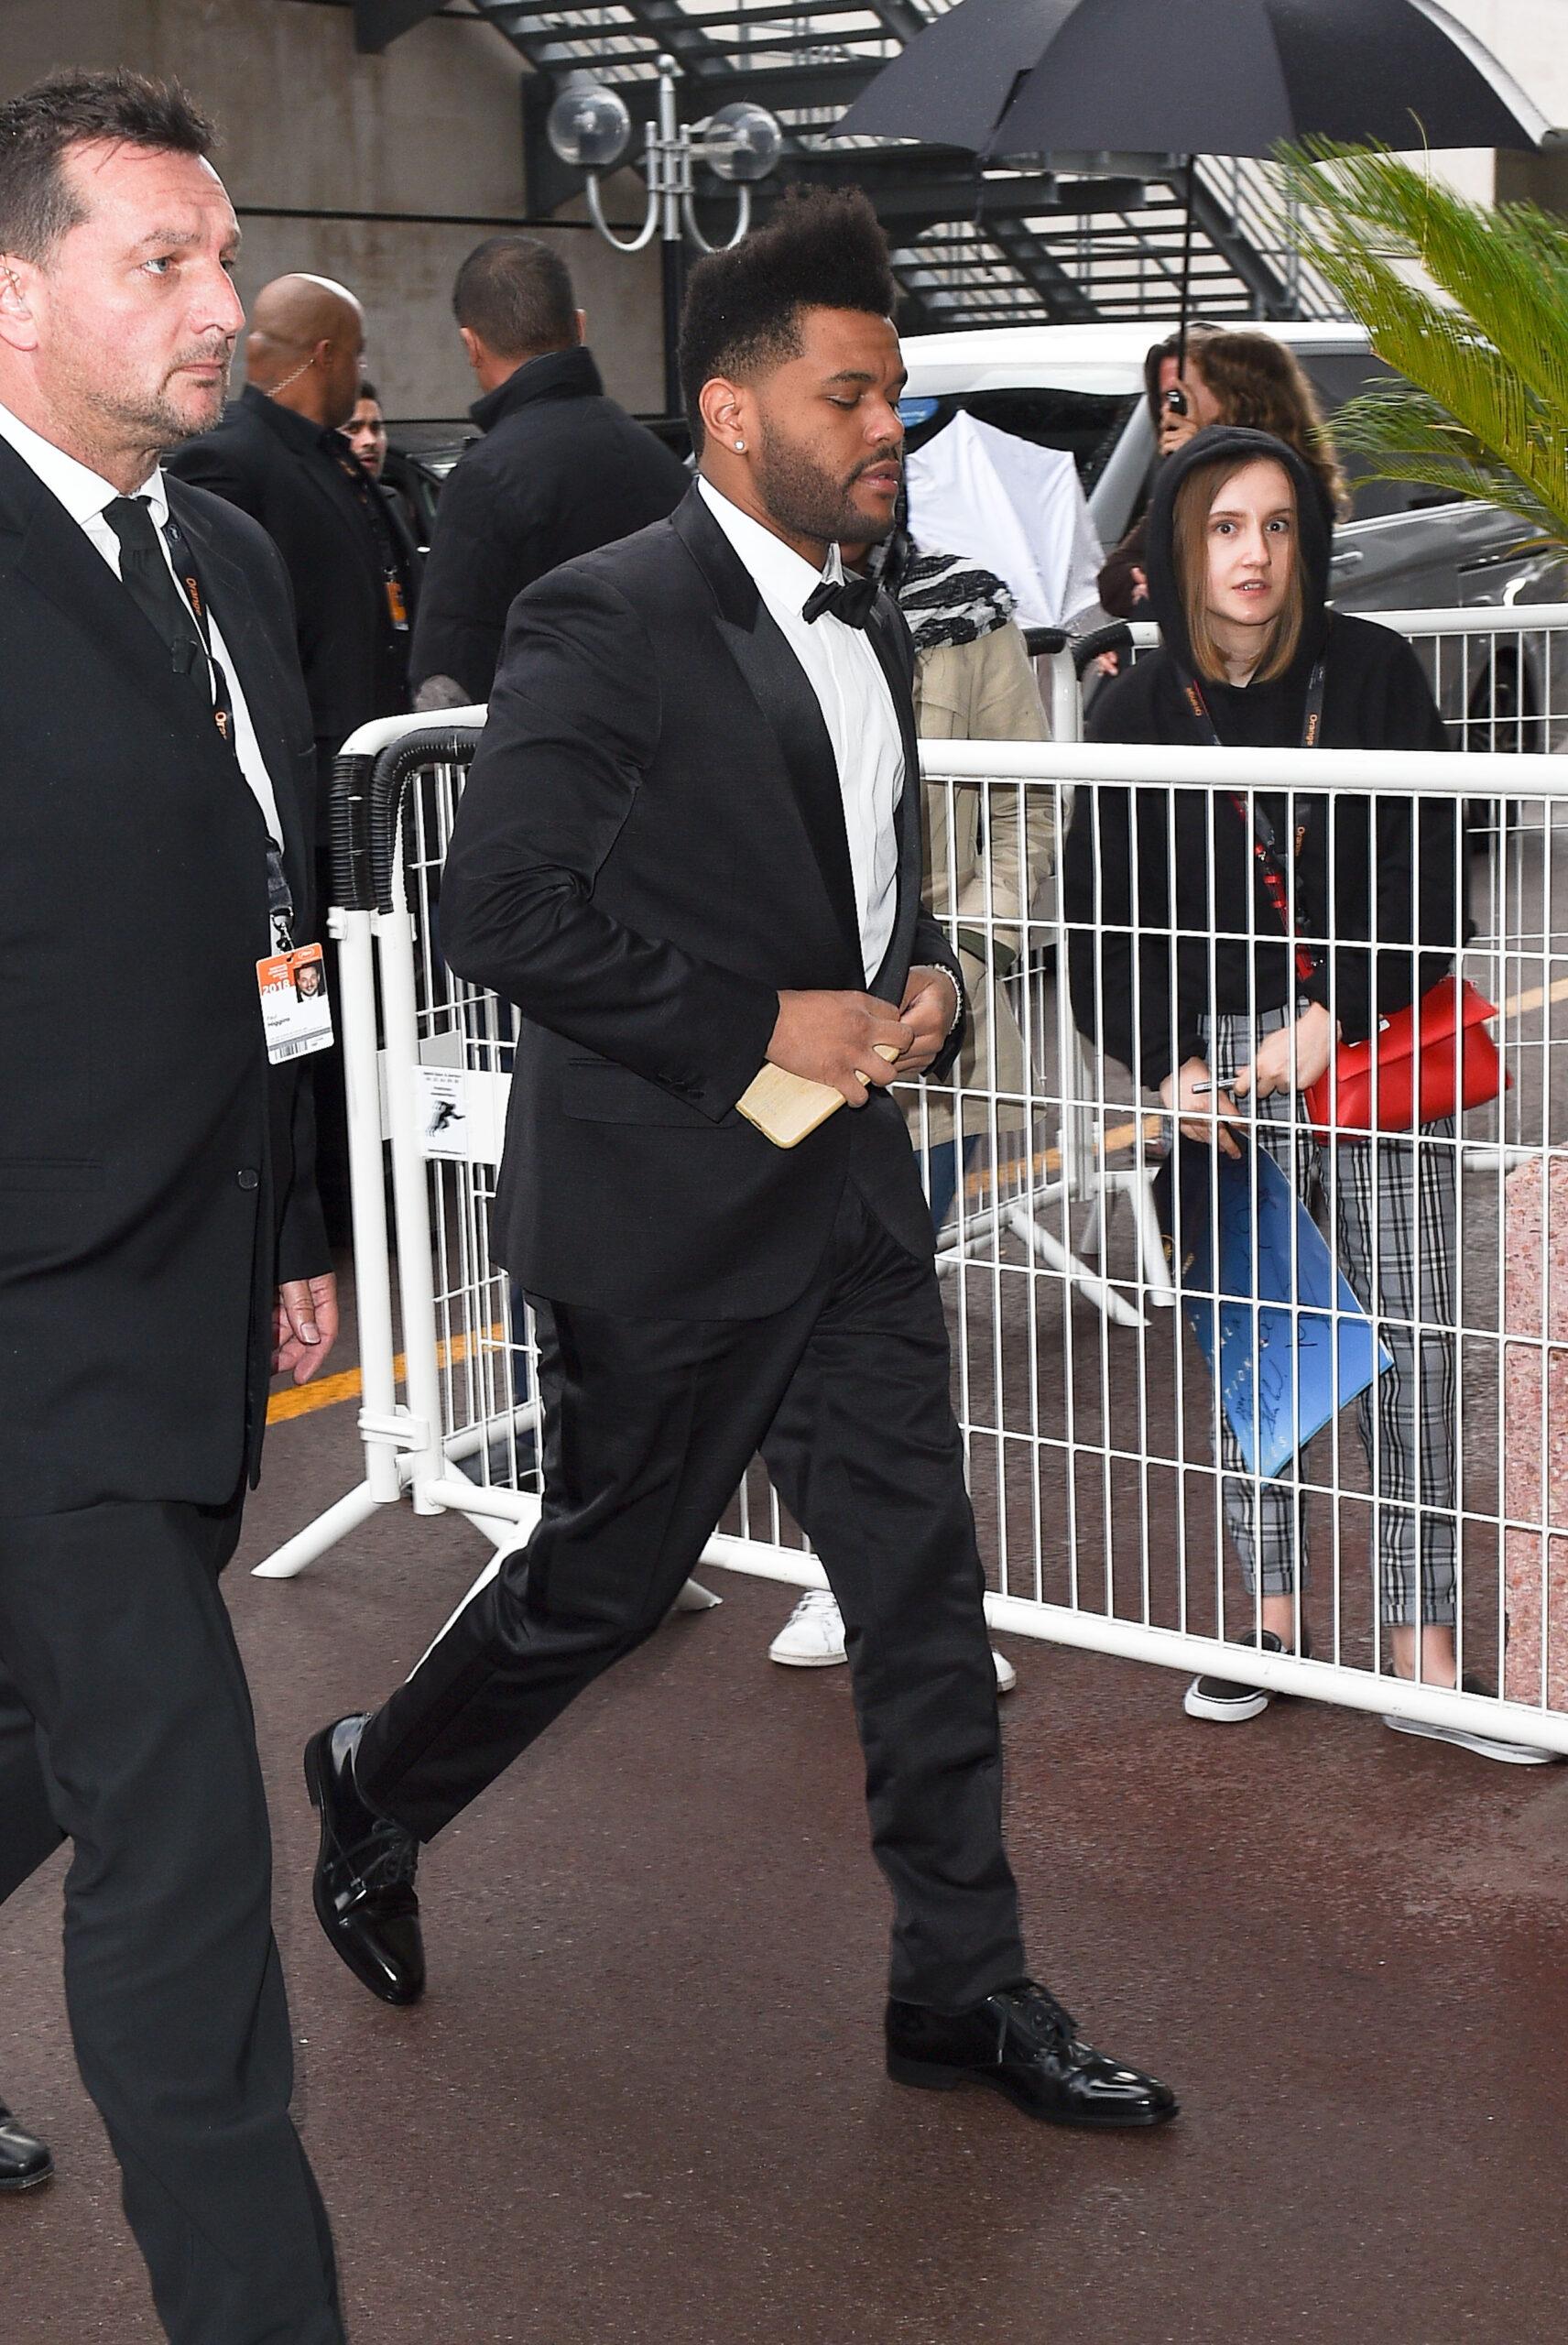 The Weeknd Abel Makkonen Tesfaye is seen arriving at the Palais De Festival in Cannes